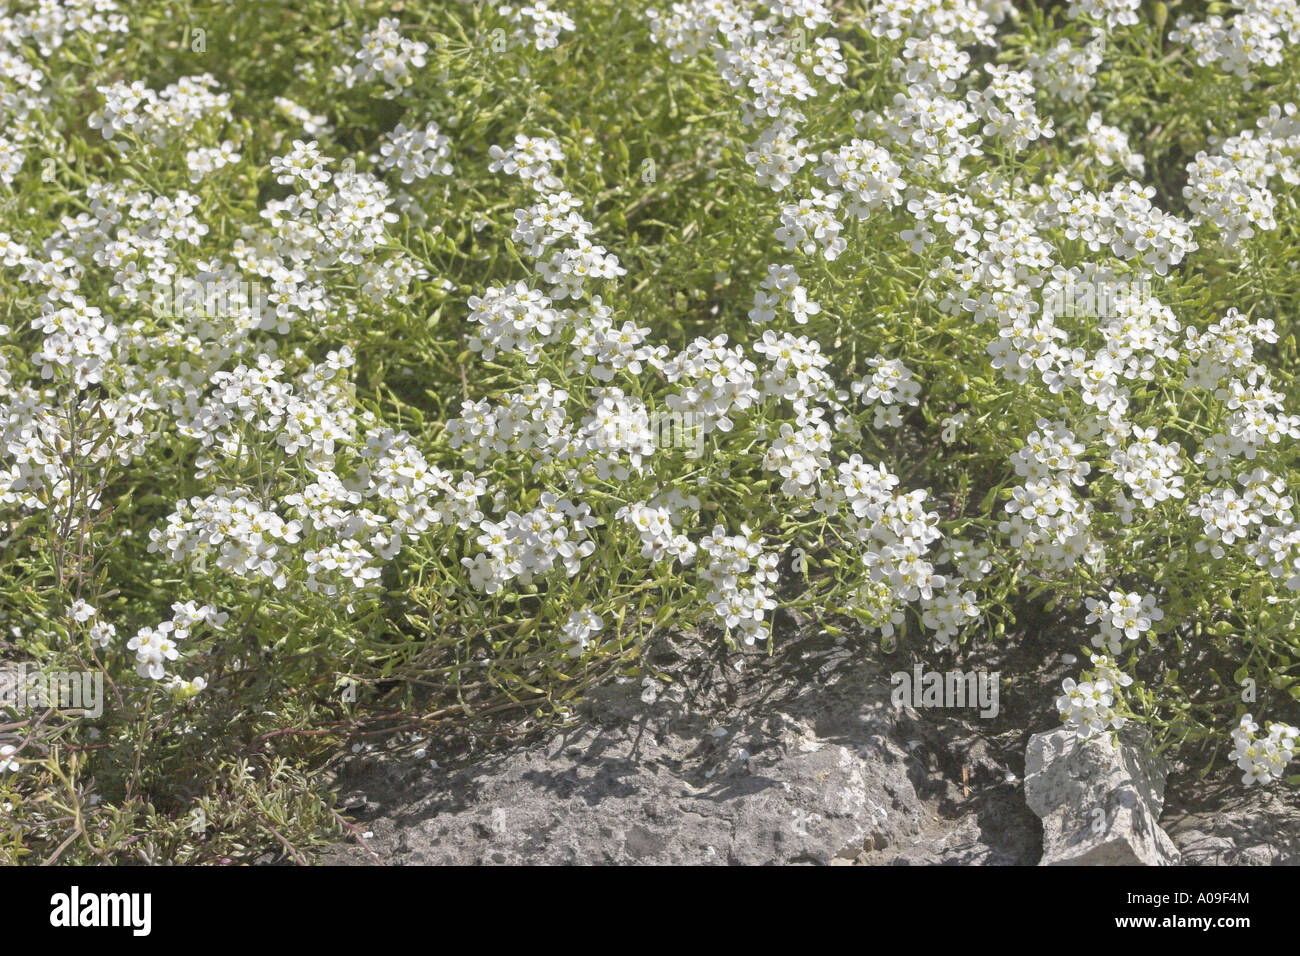 Chamois Cress, Chamois Grass (Pritzelago alpina, Hutchinsia alpina, Iberidella alpina), blooming Stock Photo